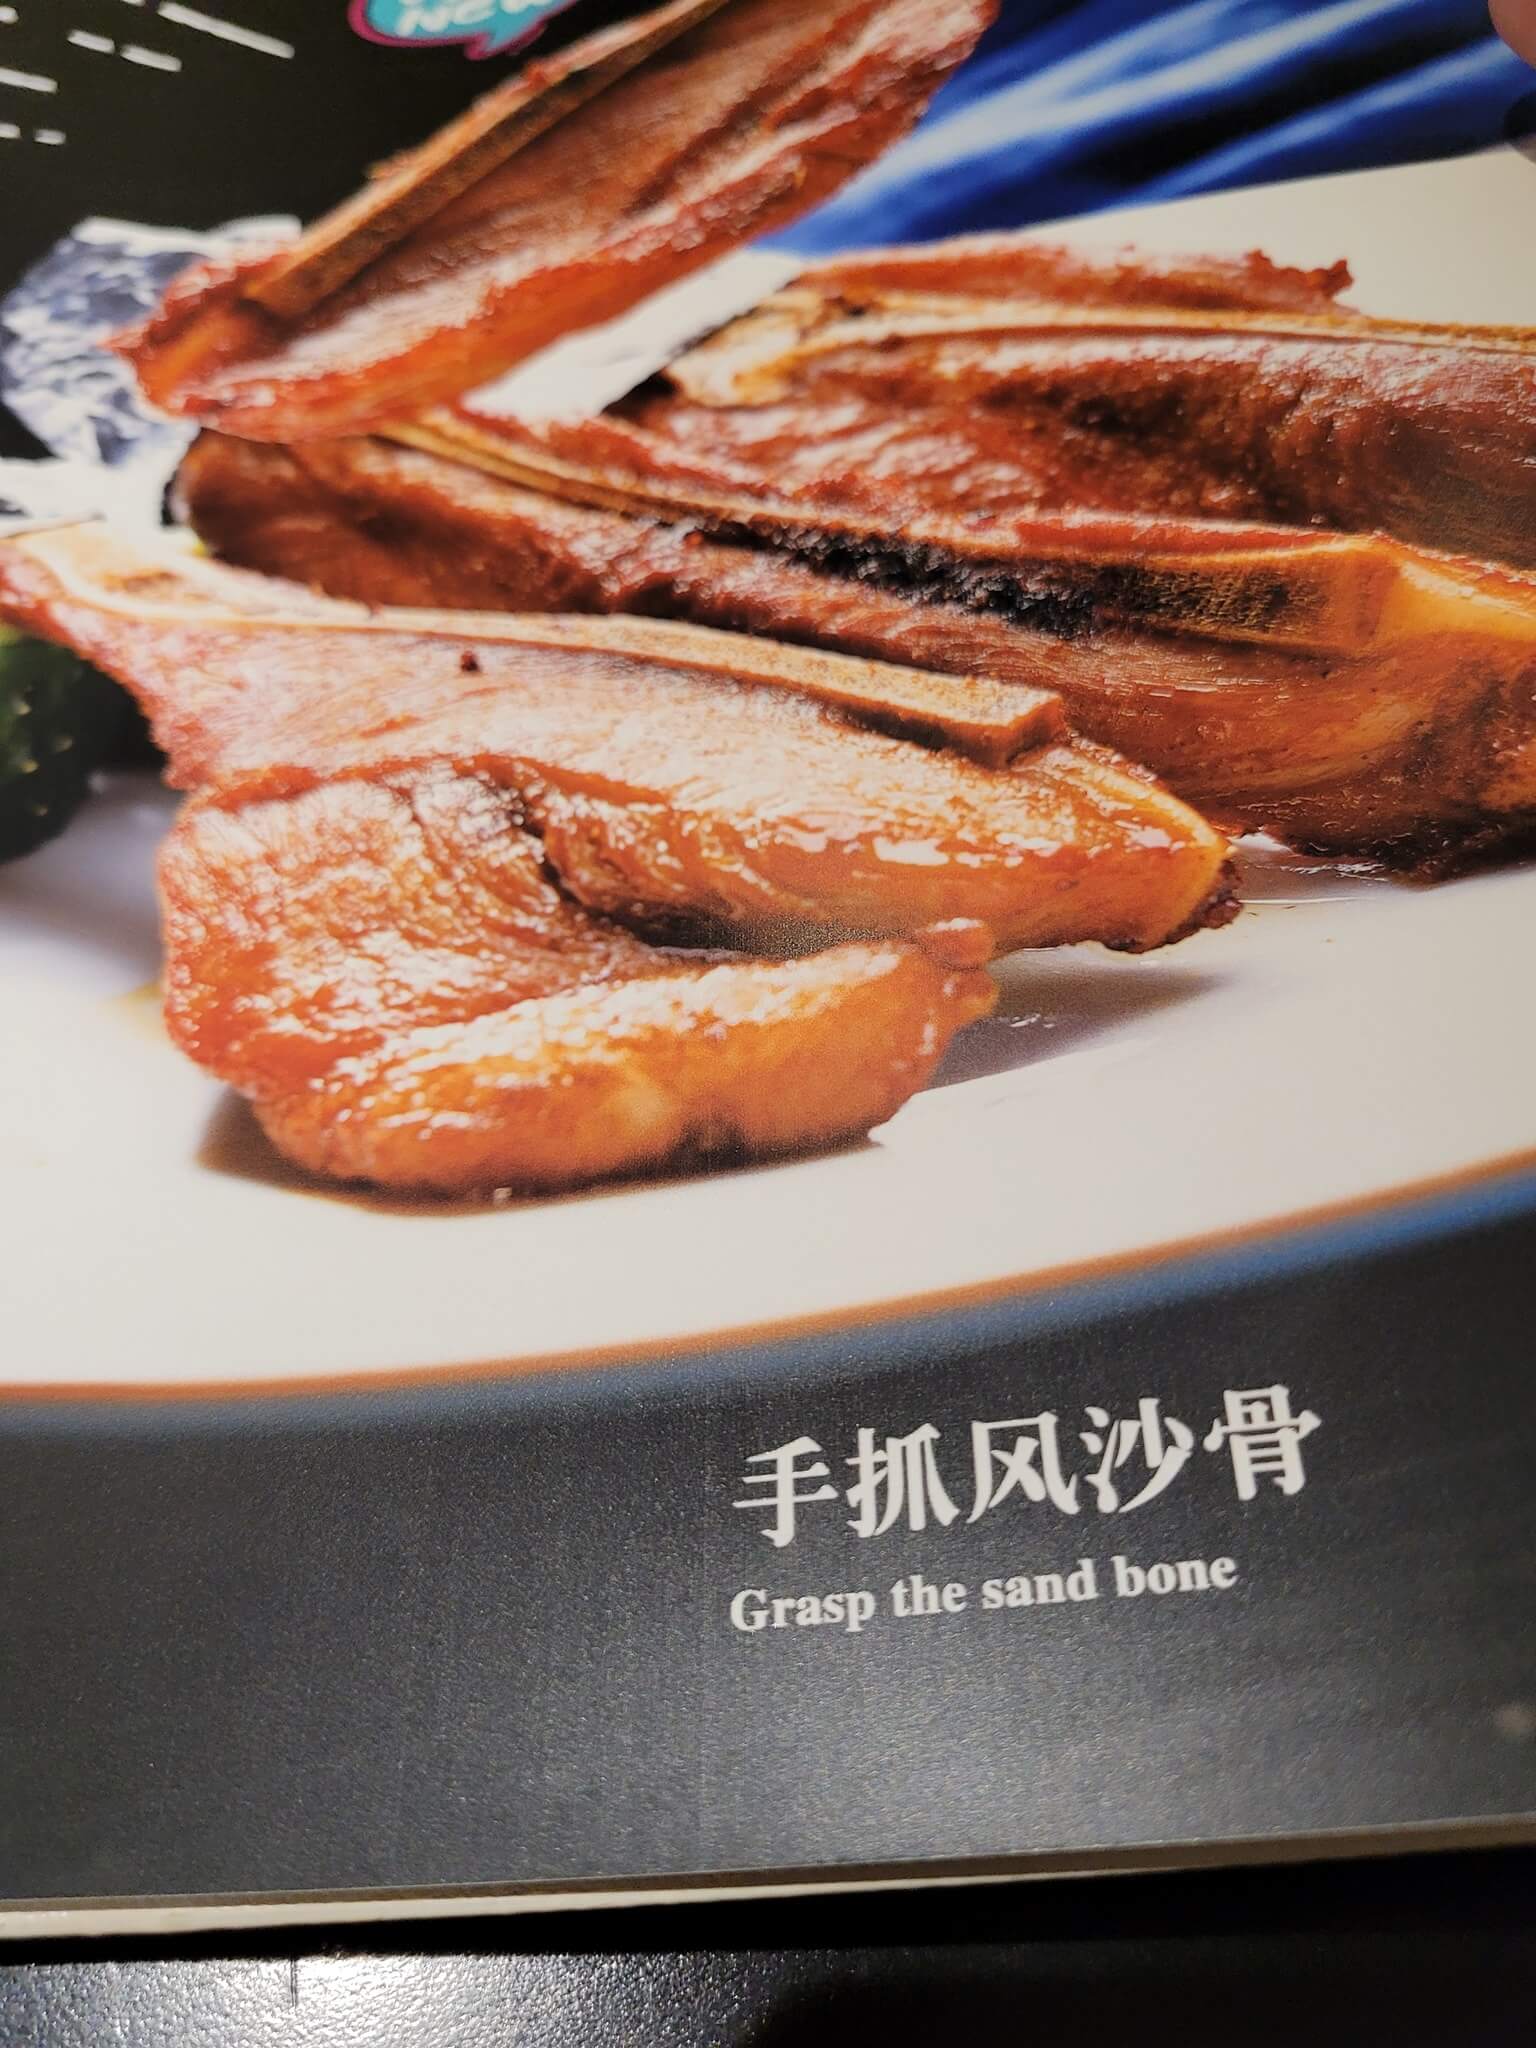 awful-english-translations-in-chinese-restaurant-menu-sand-bone